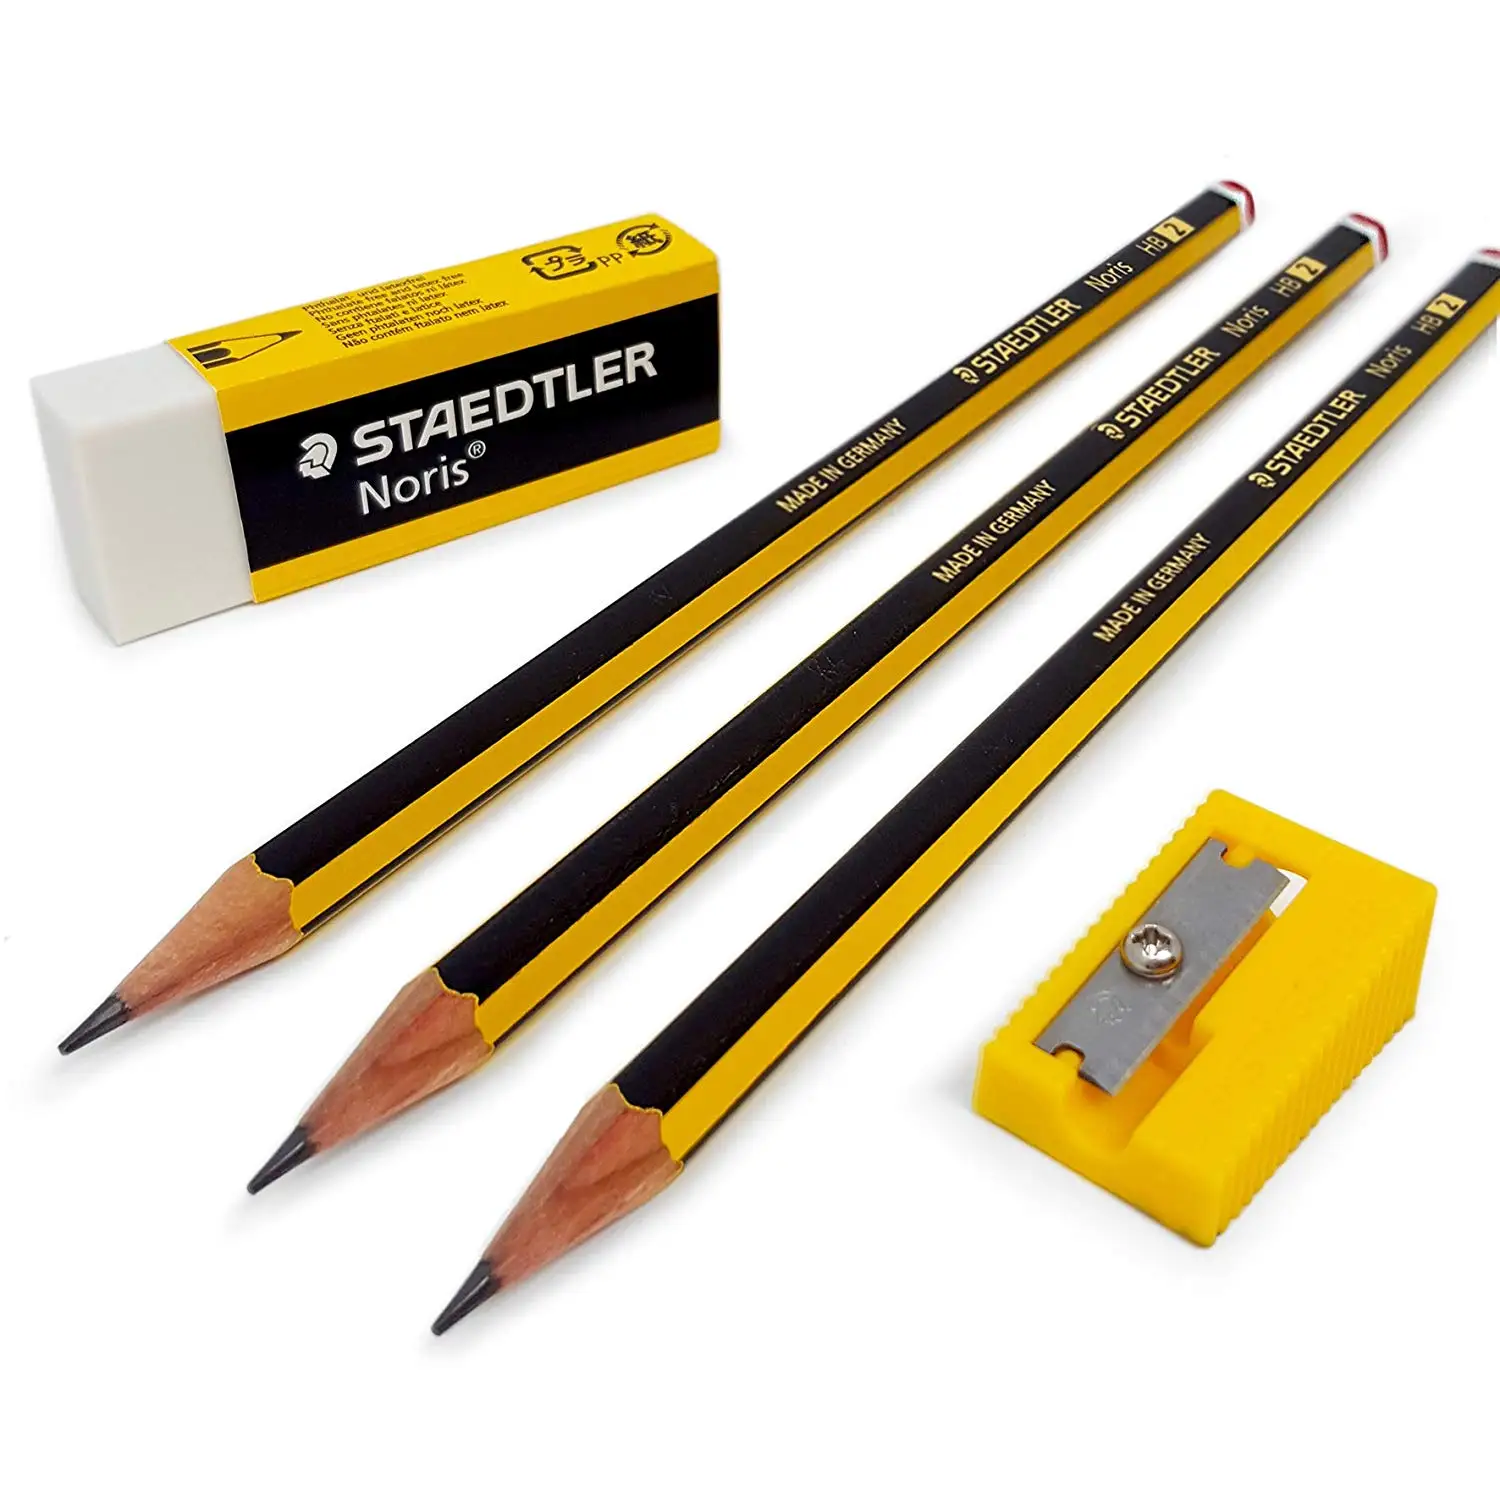 cheap hb pencils